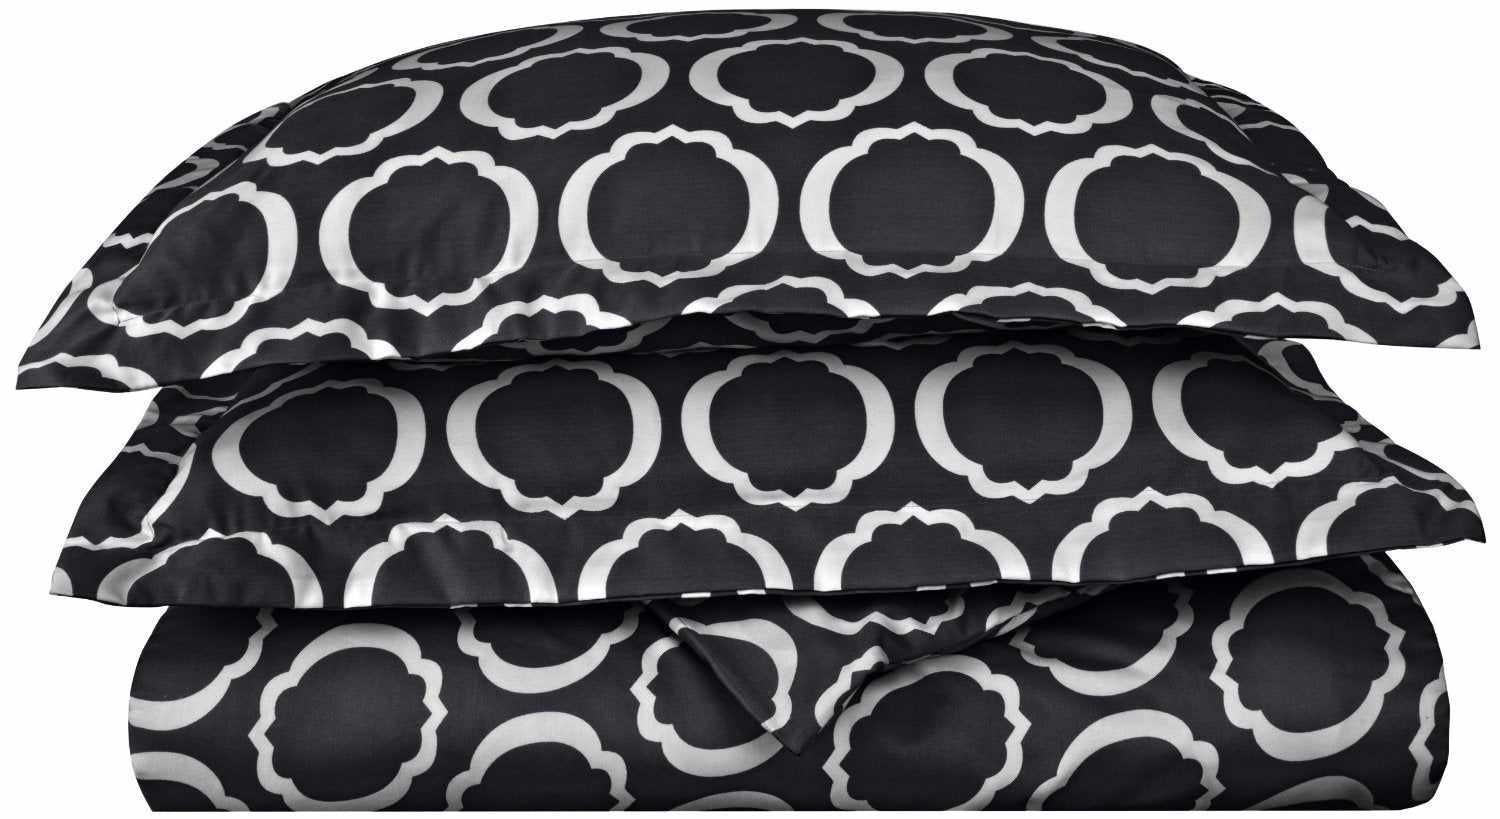 Superior Scroll Park Cotton and Polyester Blend Modern Geometric Duvet Cover Set -Black/white